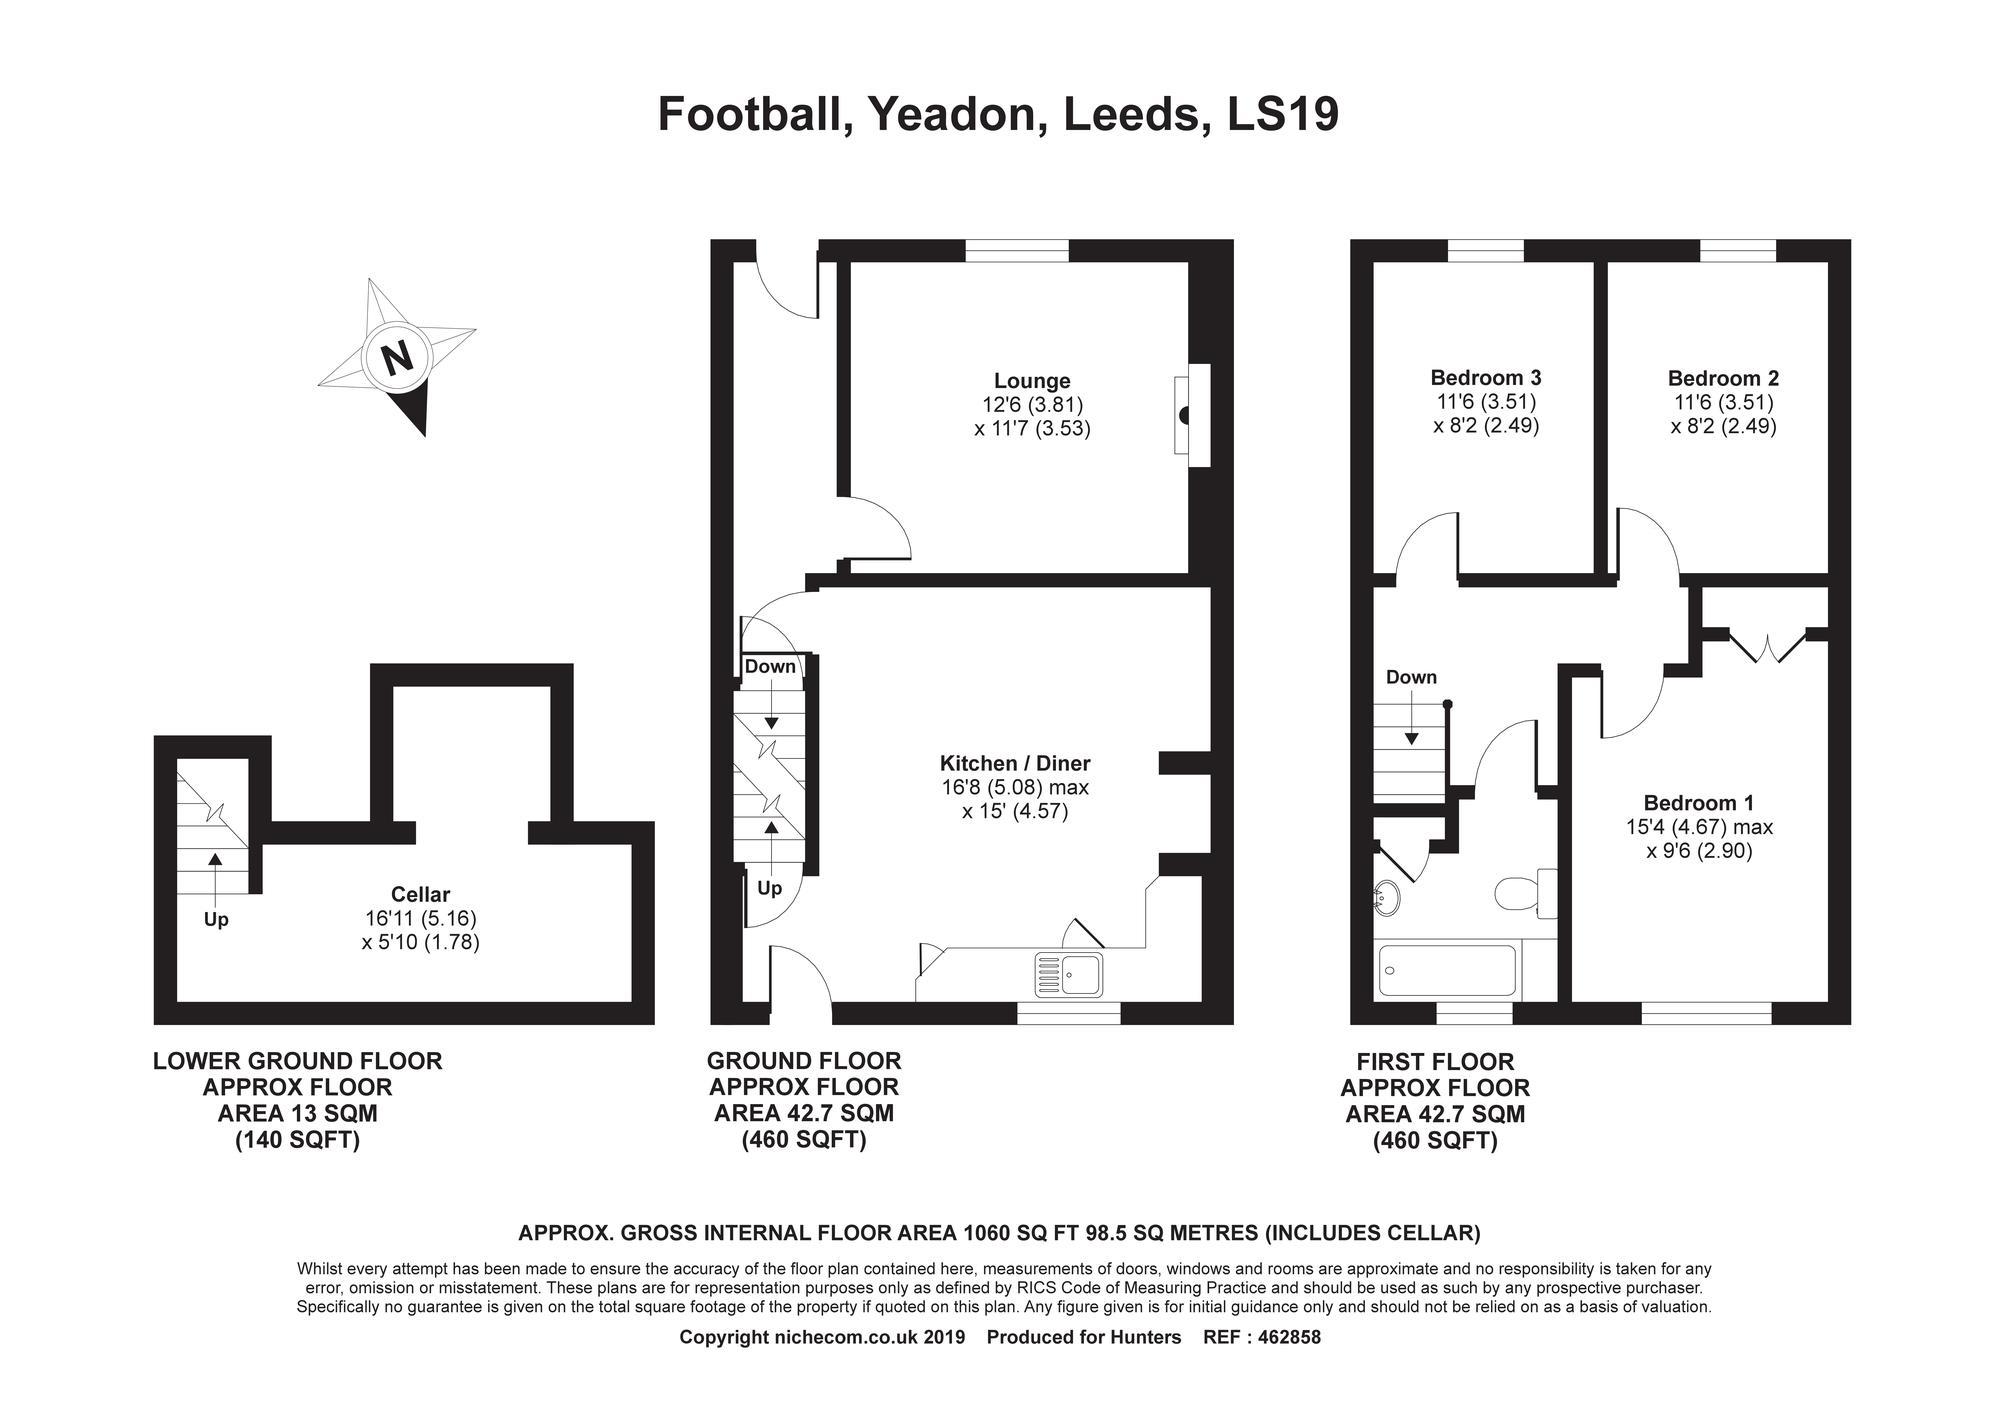 3 Bedrooms Terraced house for sale in Football, Yeadon, Leeds LS19